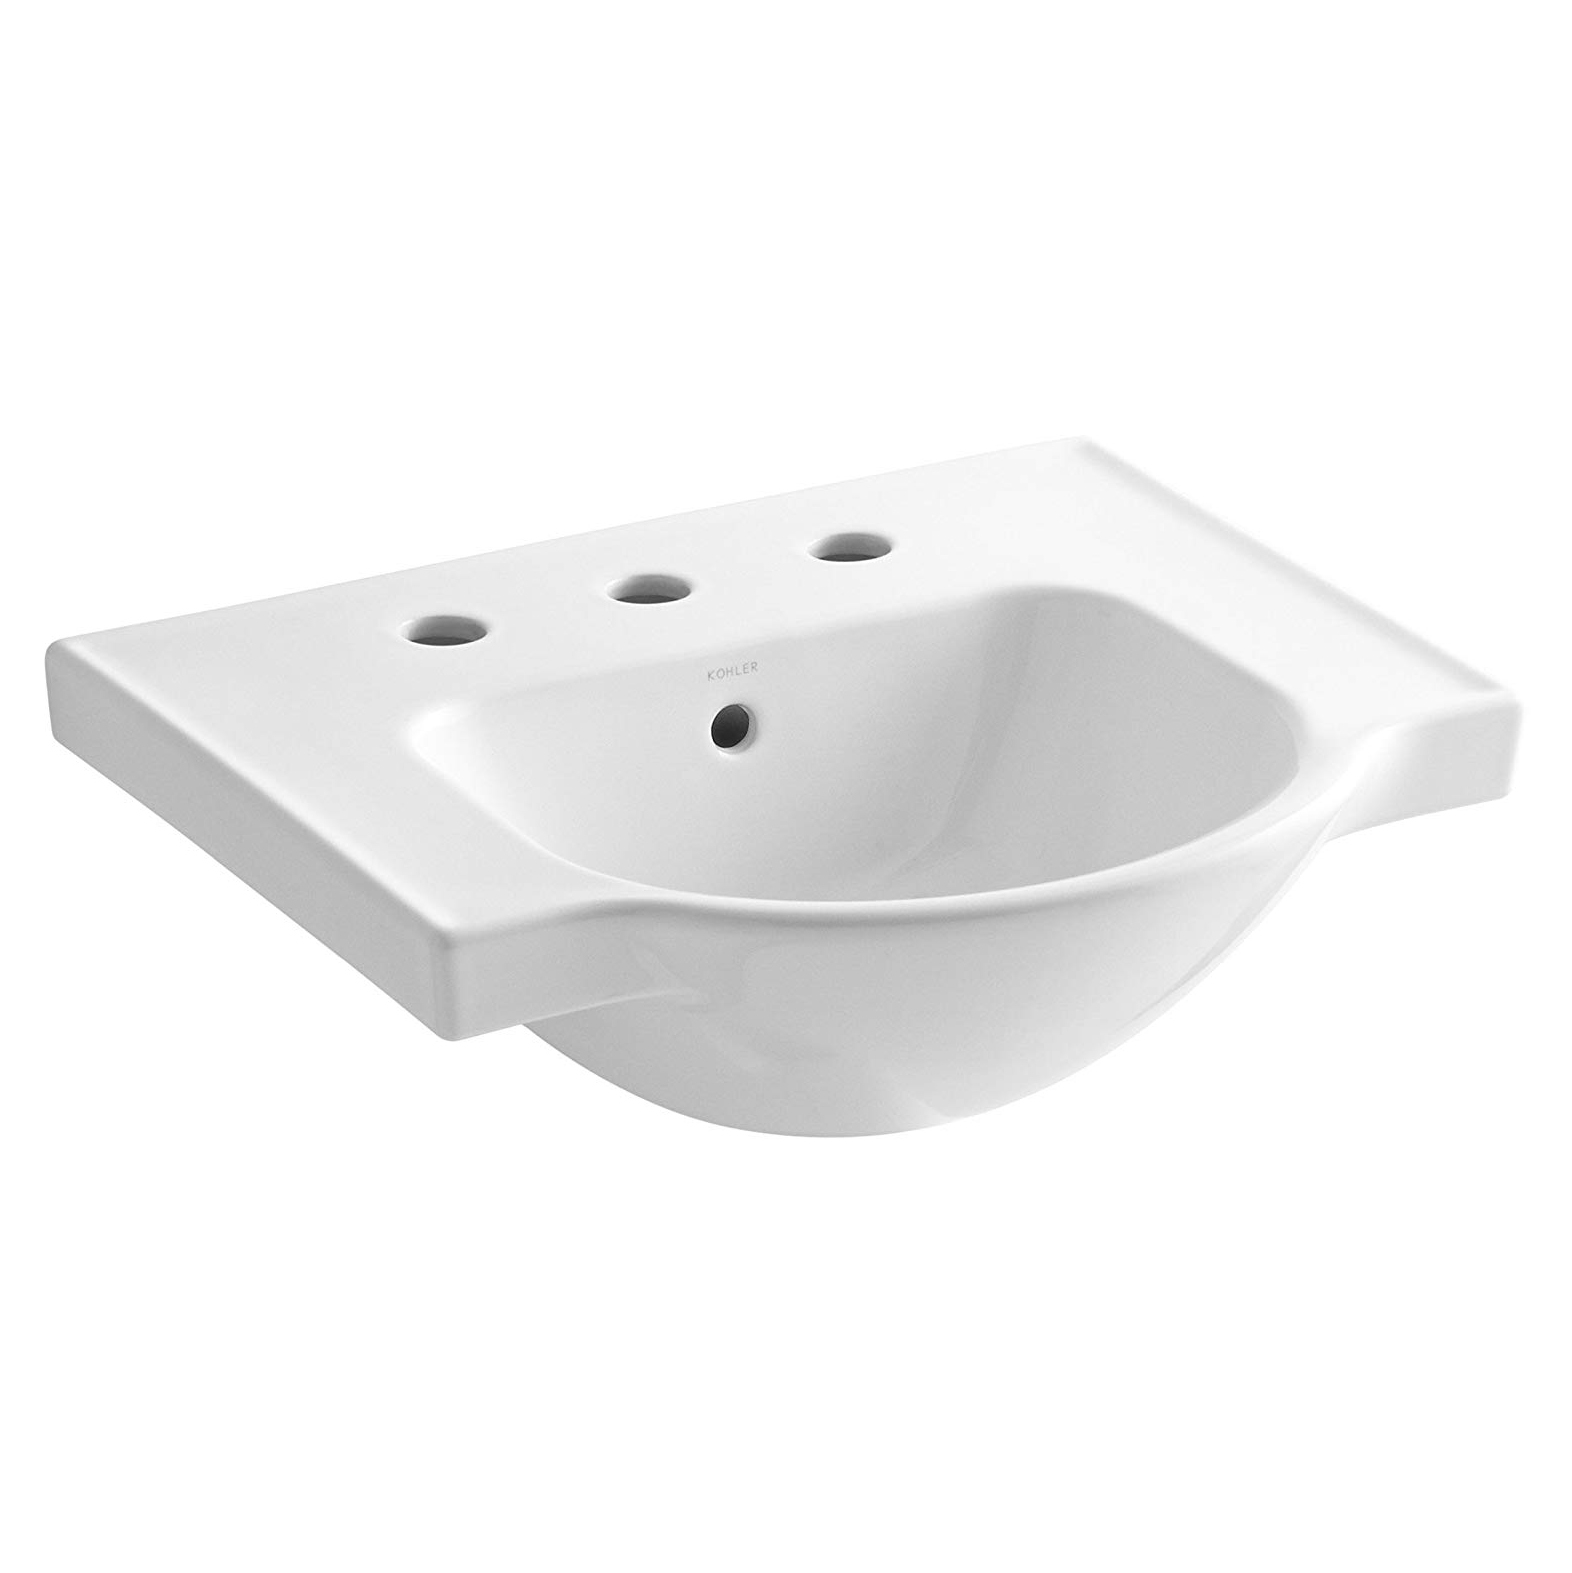 Veer 21" Widespread Pedestal Sink Basin in White